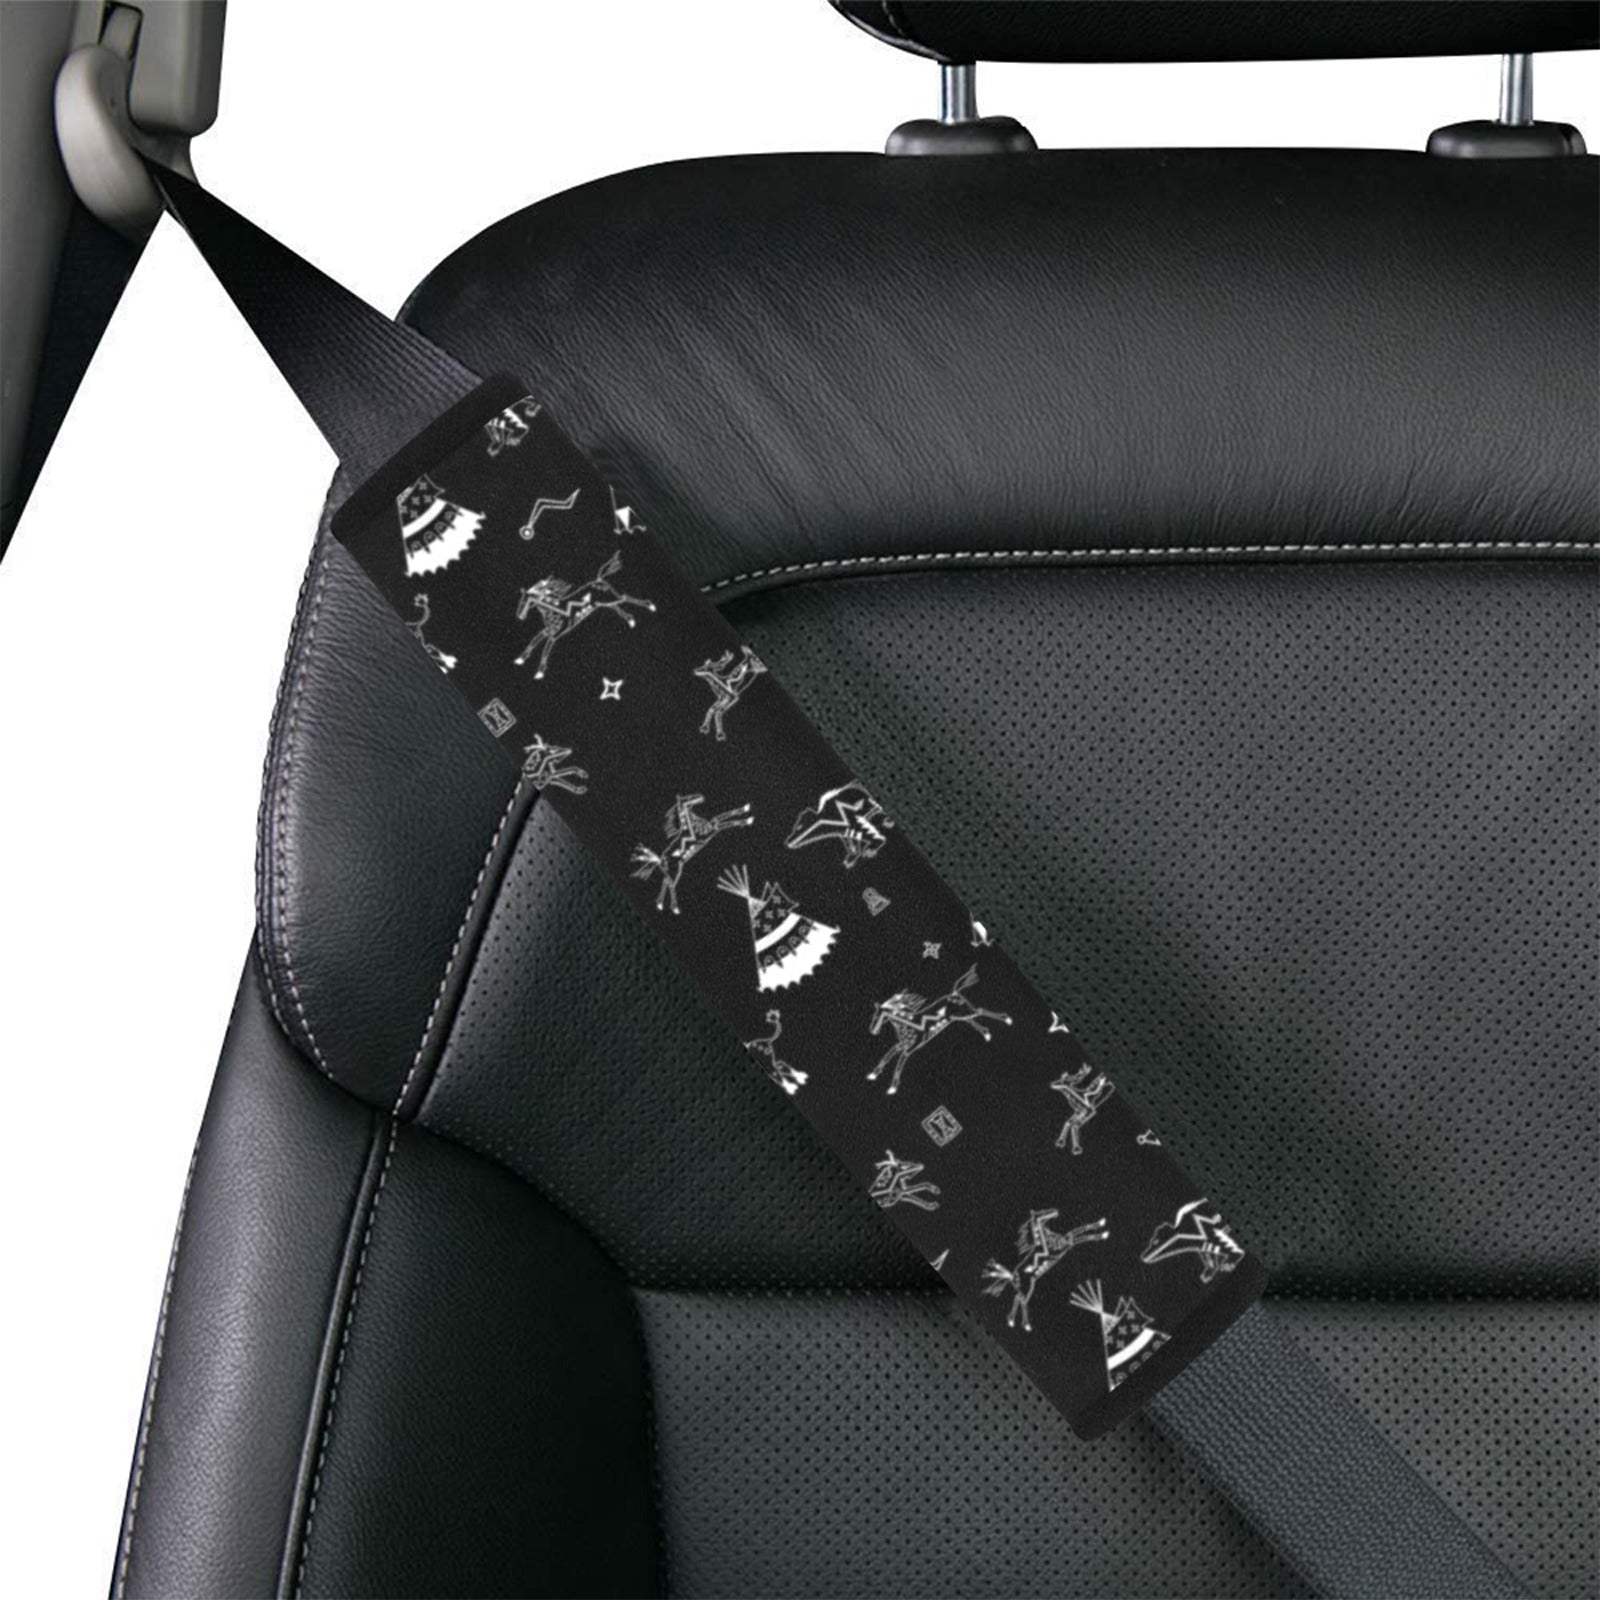 Ledger Dabbles Black Car Seat Belt Cover 7''x12.6'' (Pack of 2)